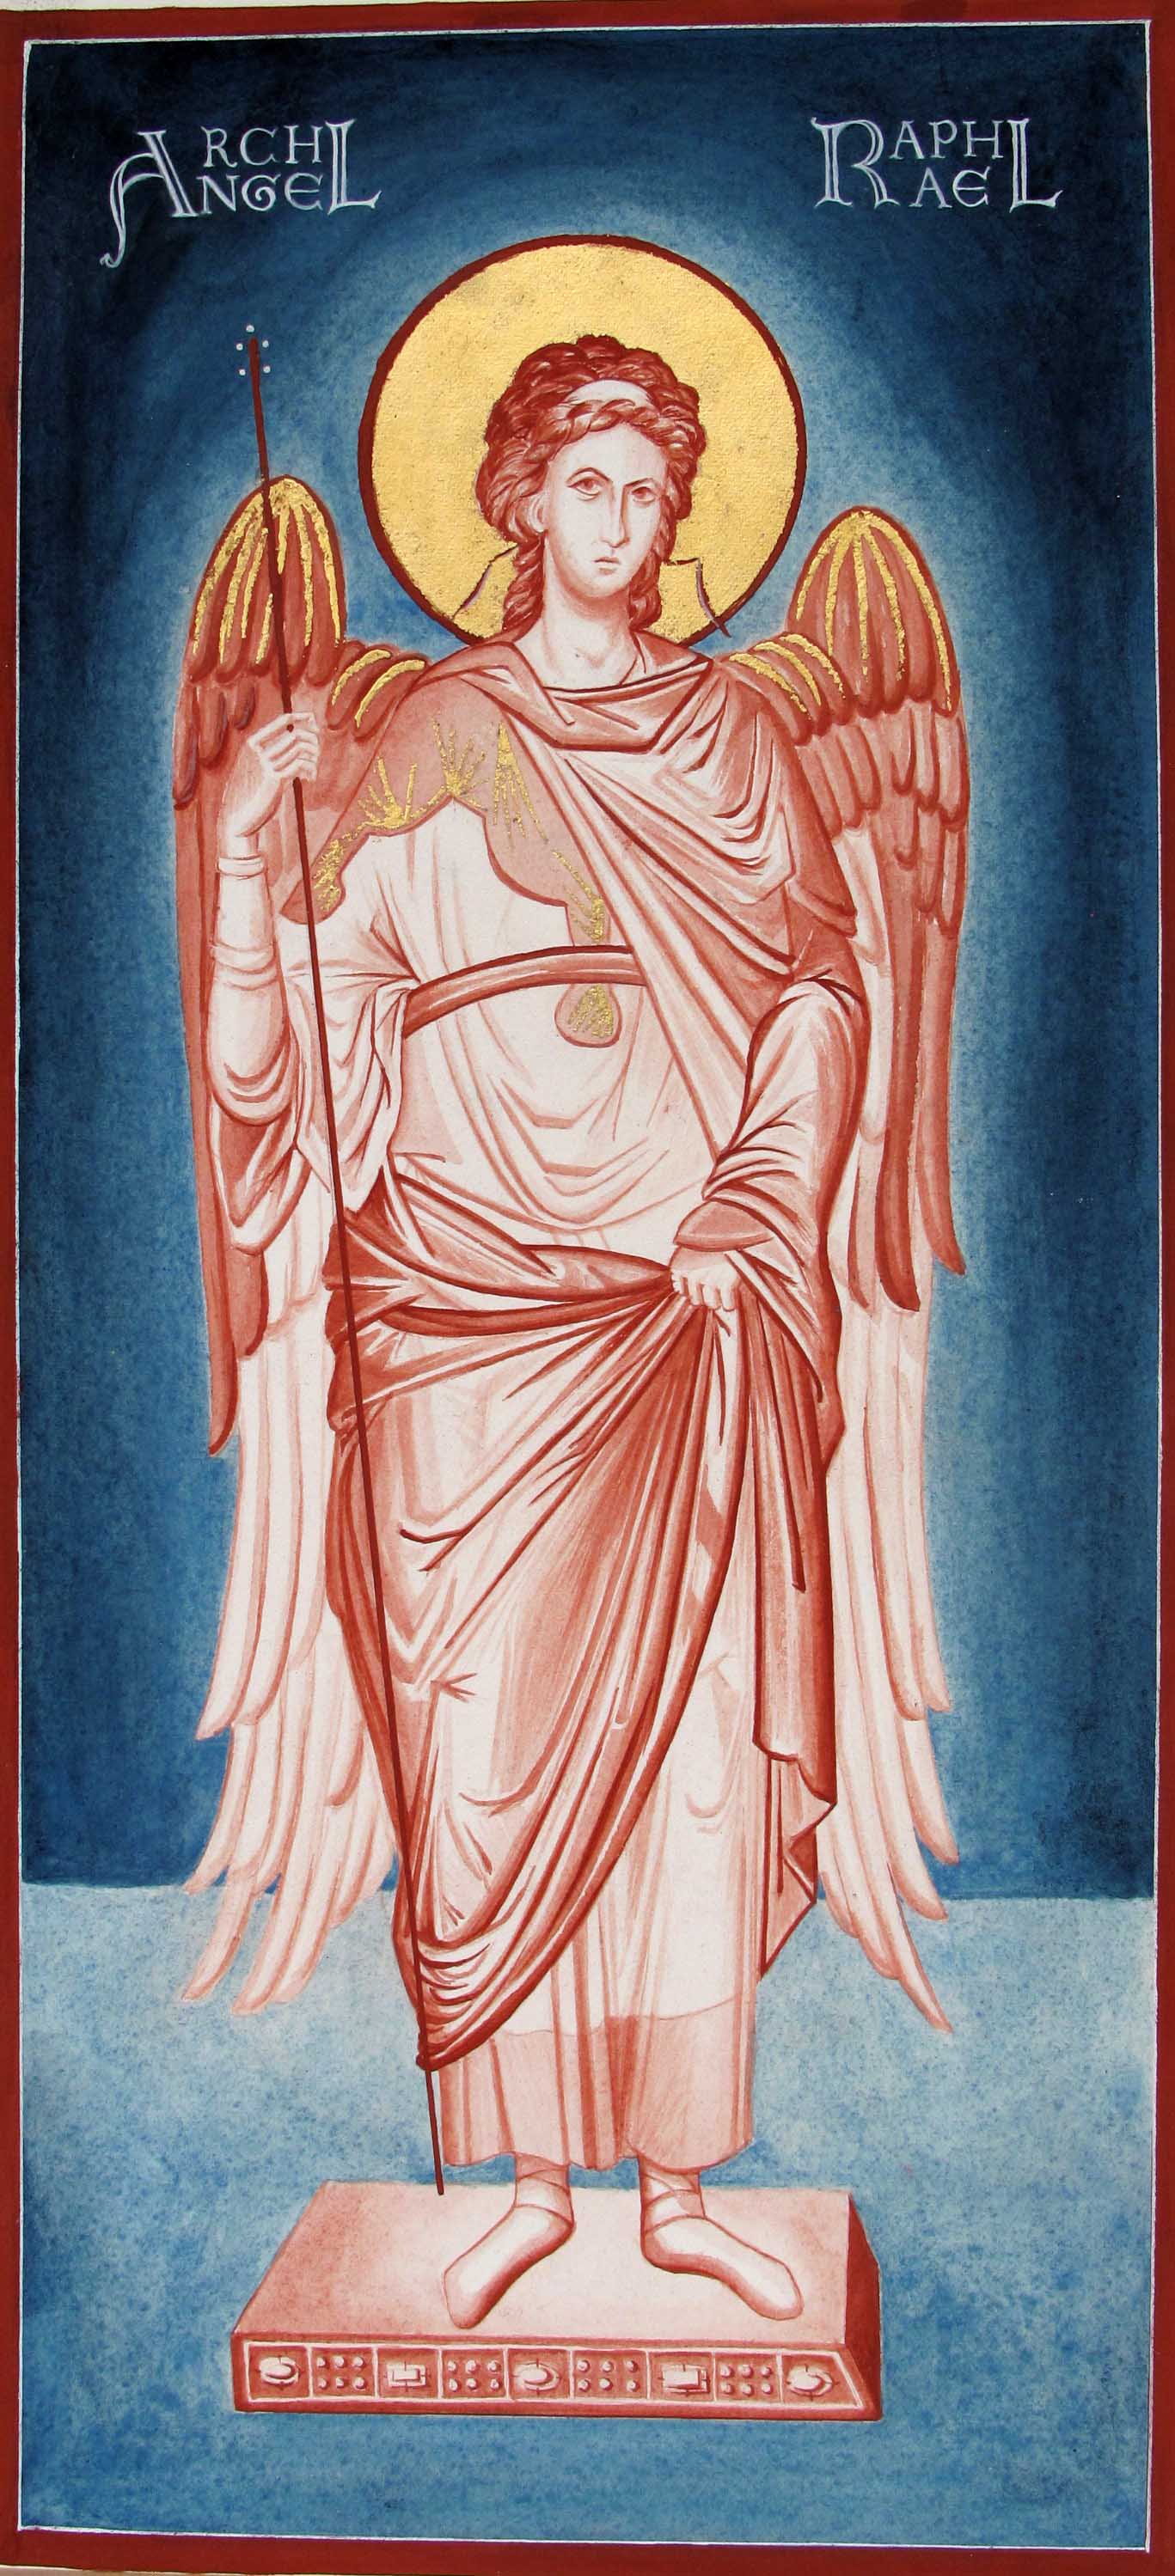 Archangel raphael